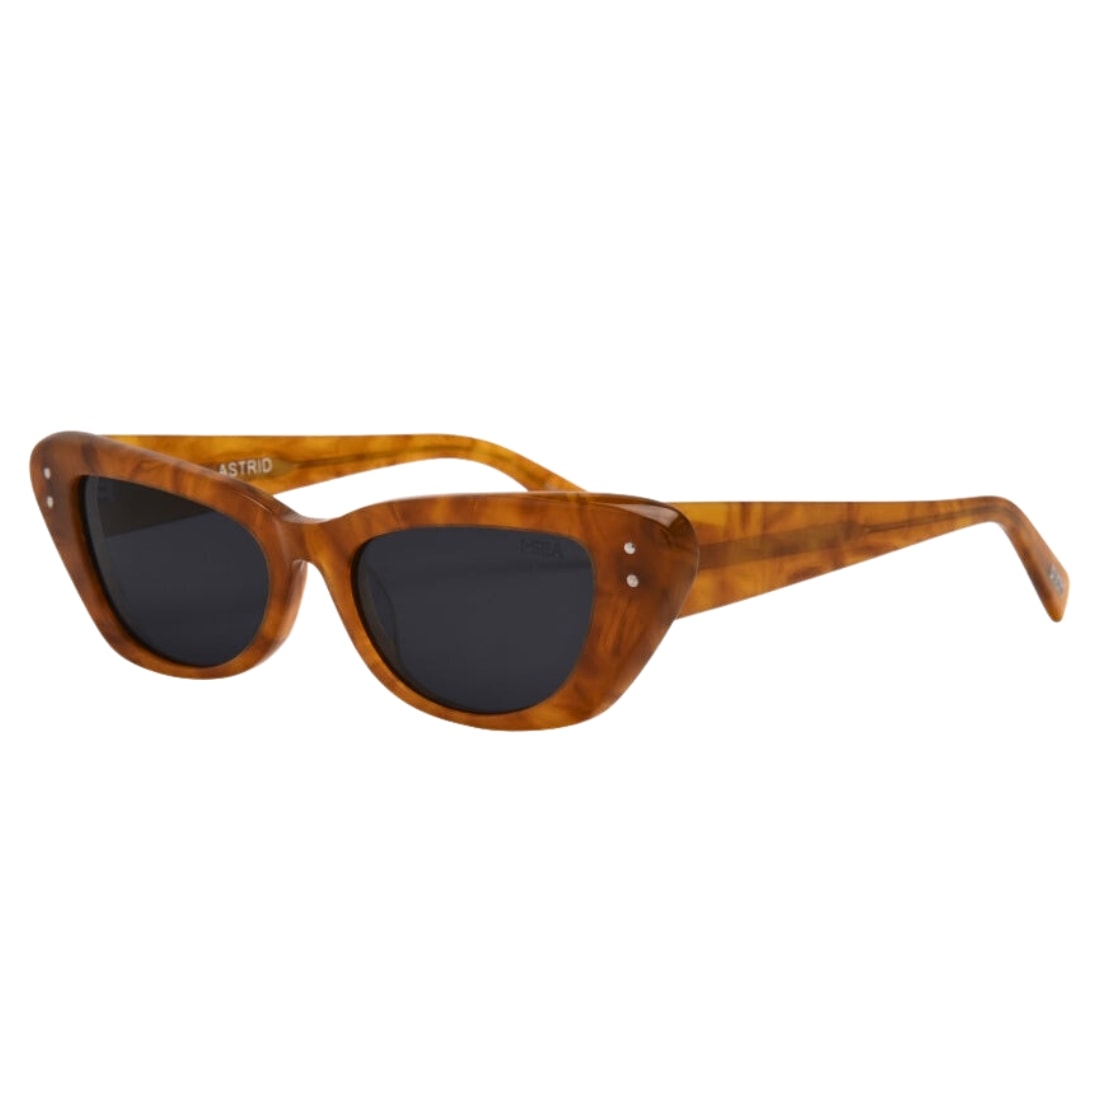 I-Sea Astrid Polarised Sunglasses - Amber - Cat Eye Sunglasses by I-Sea